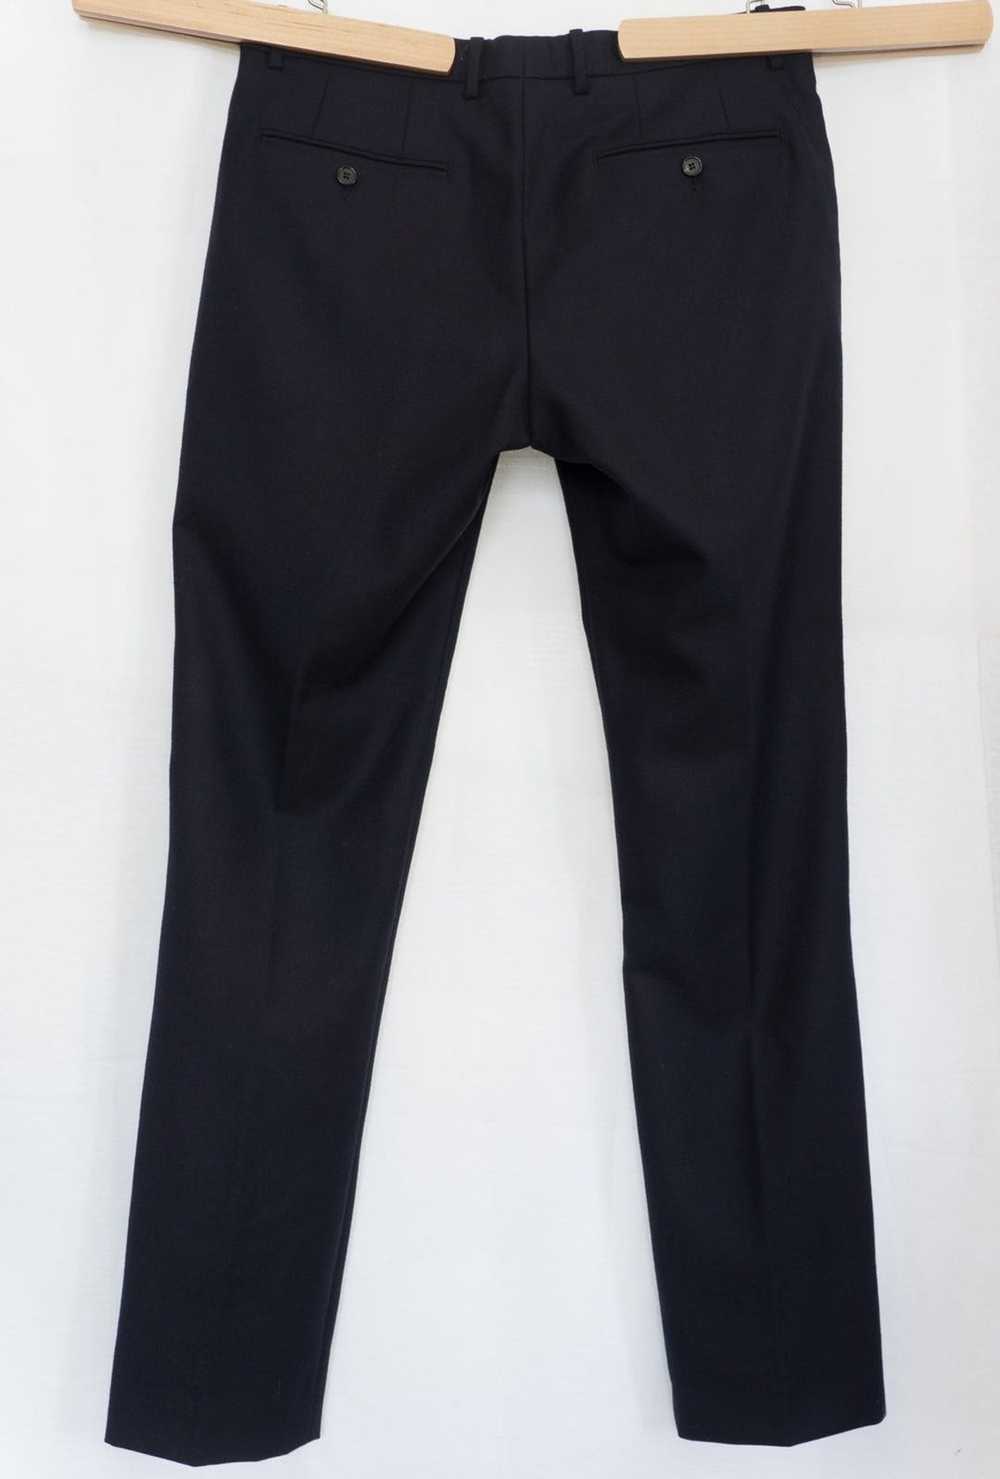 Marni Marni Wool Navy Trousers - image 2